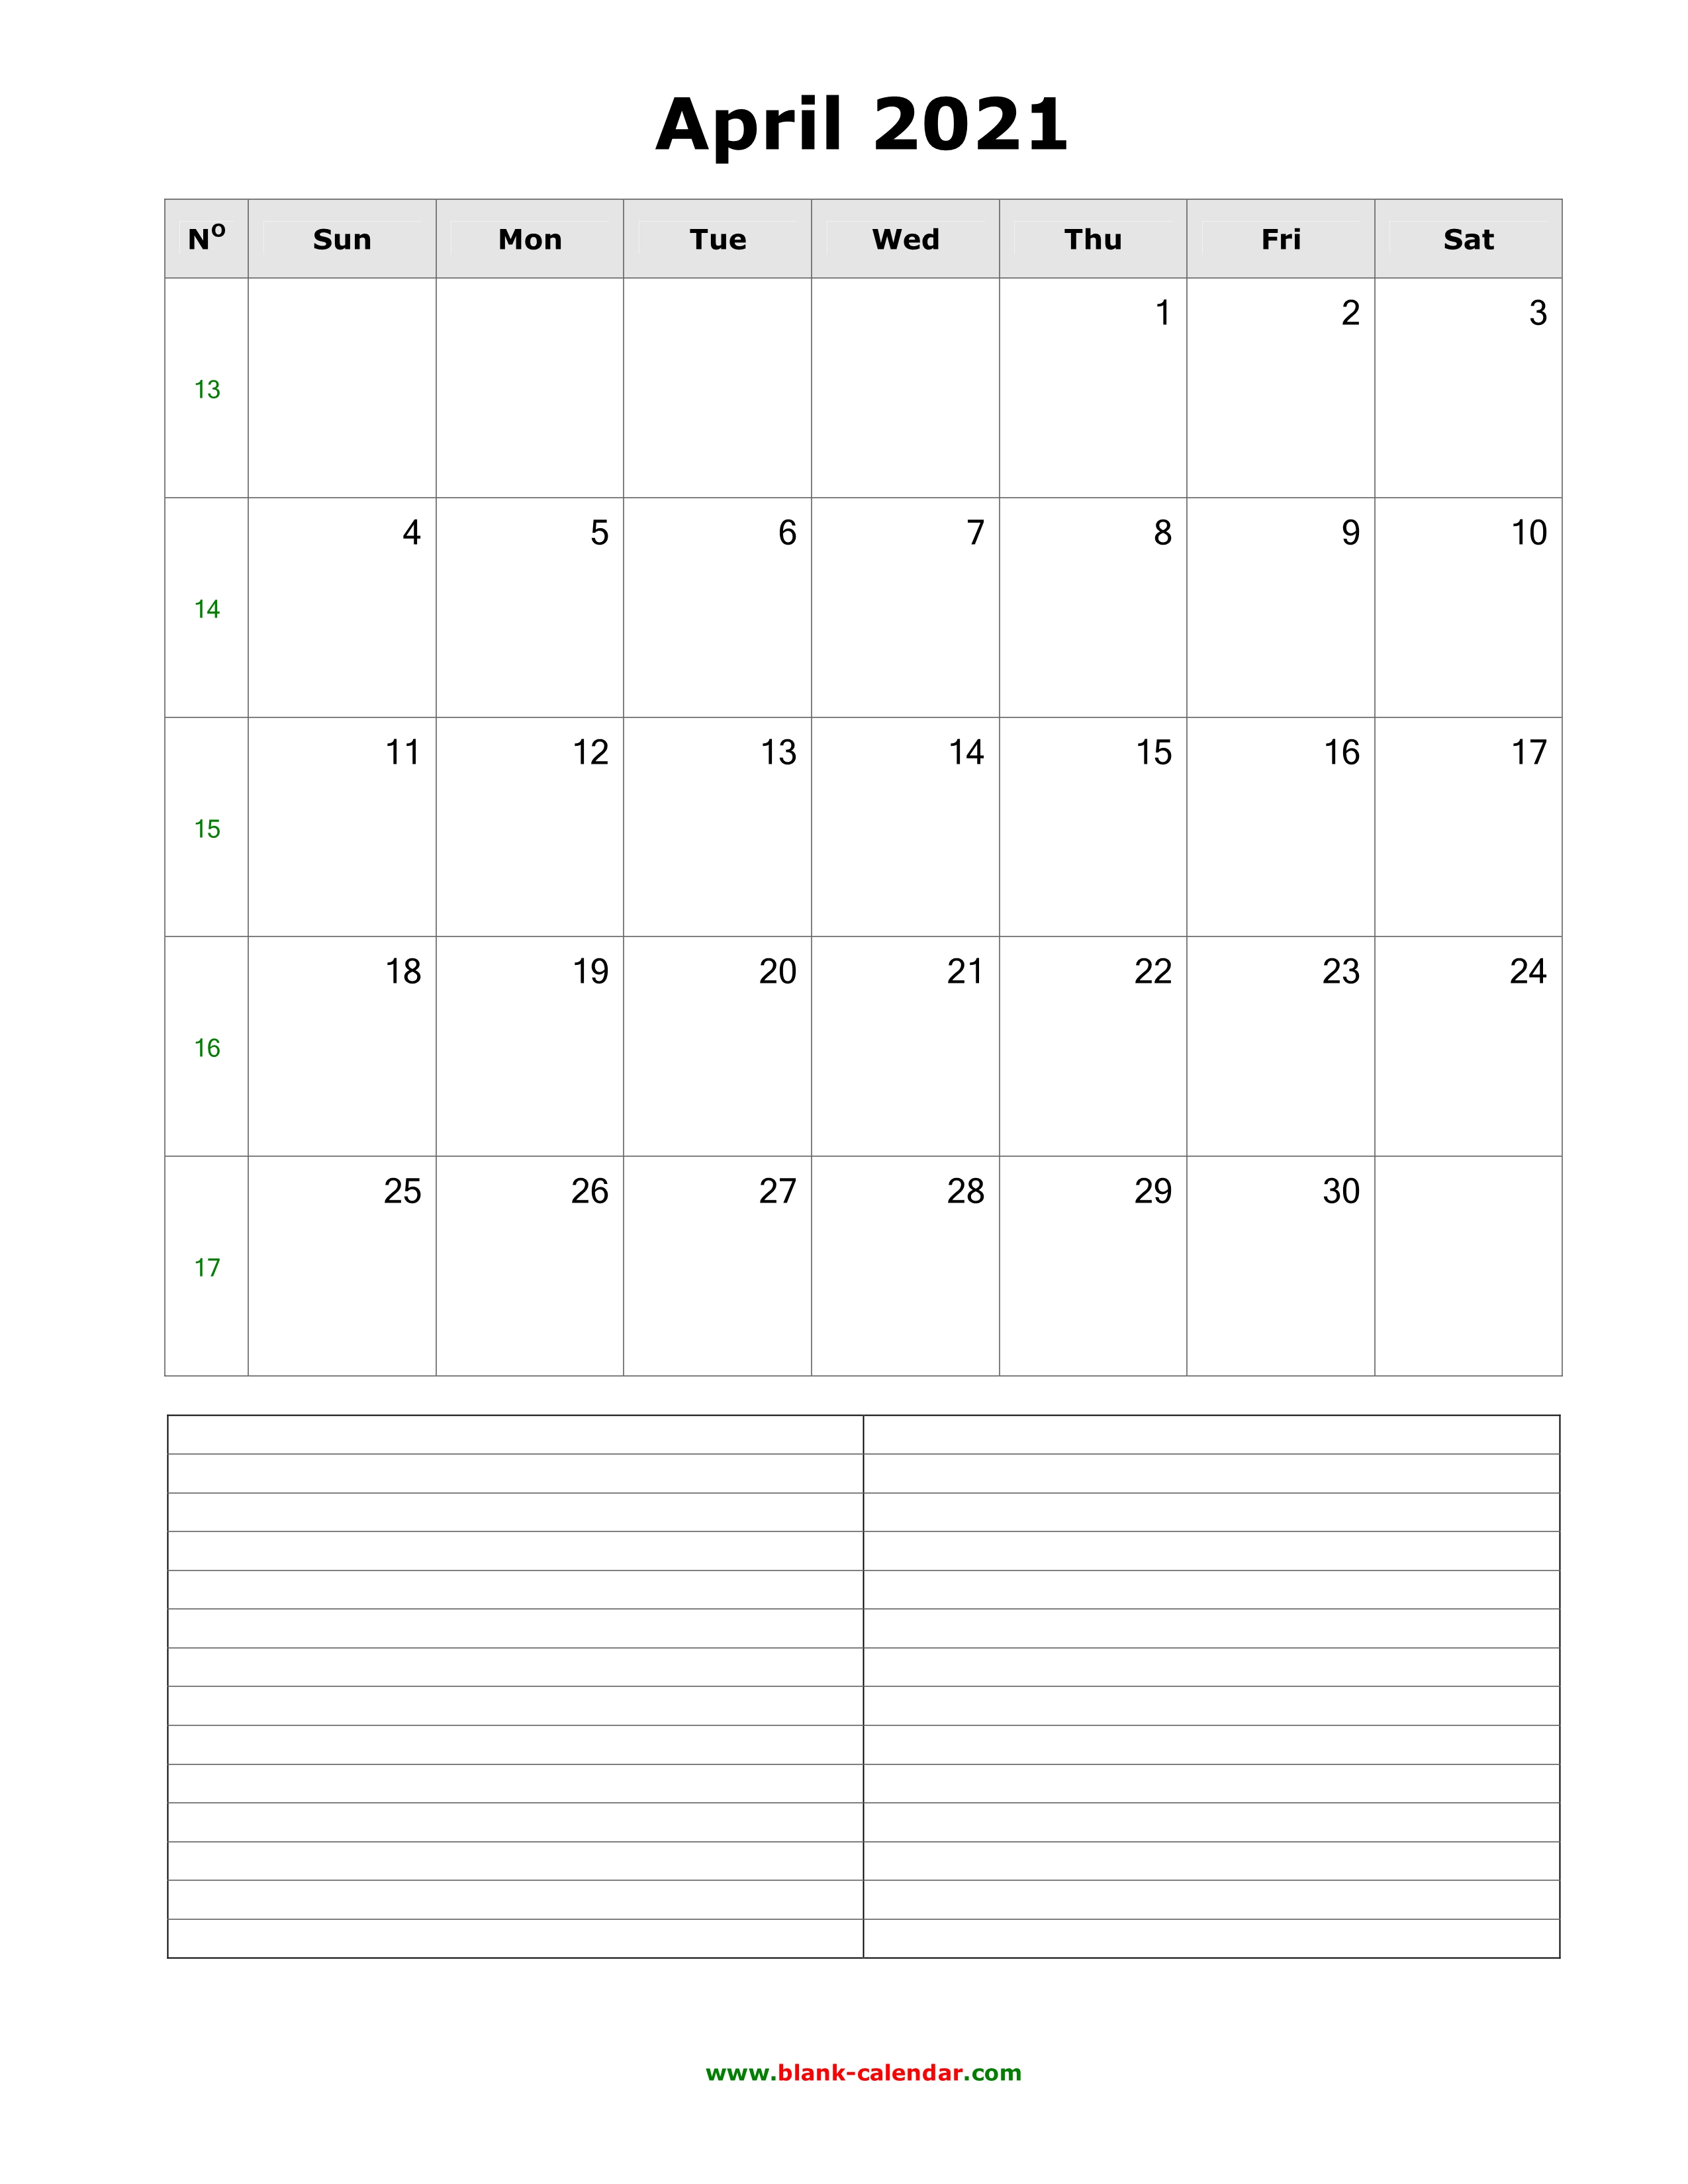 april 2021 calendar vertical Download April 2021 Blank Calendar With Space For Notes Vertical april 2021 calendar vertical